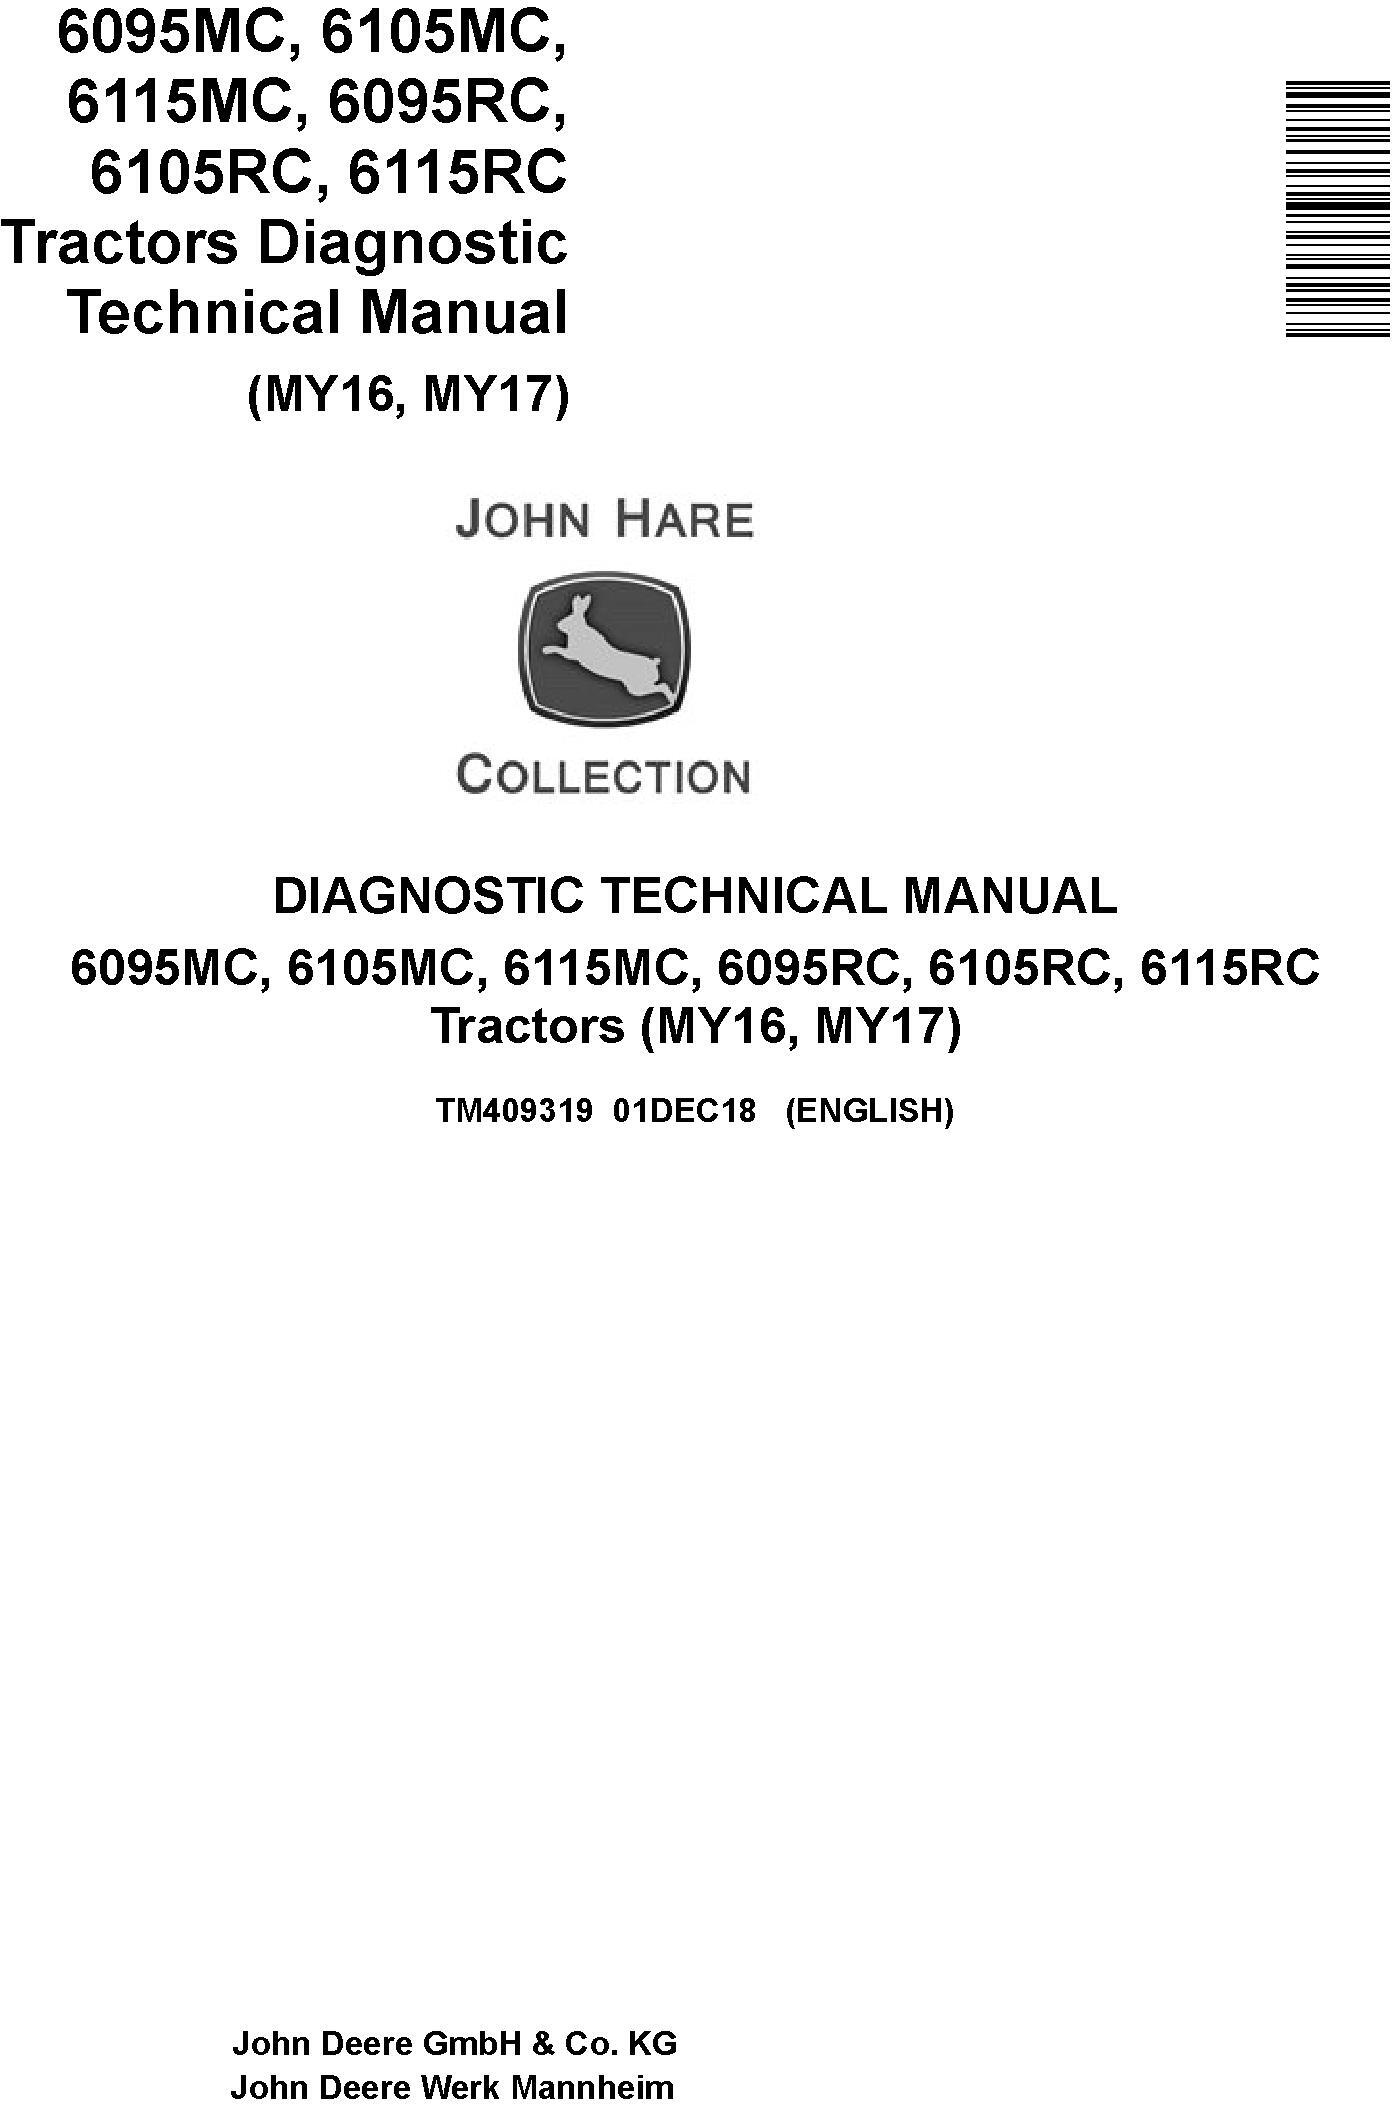 John Deere 6095MC to 6115RC Tractor Diagnostic Technical Manual TM409319